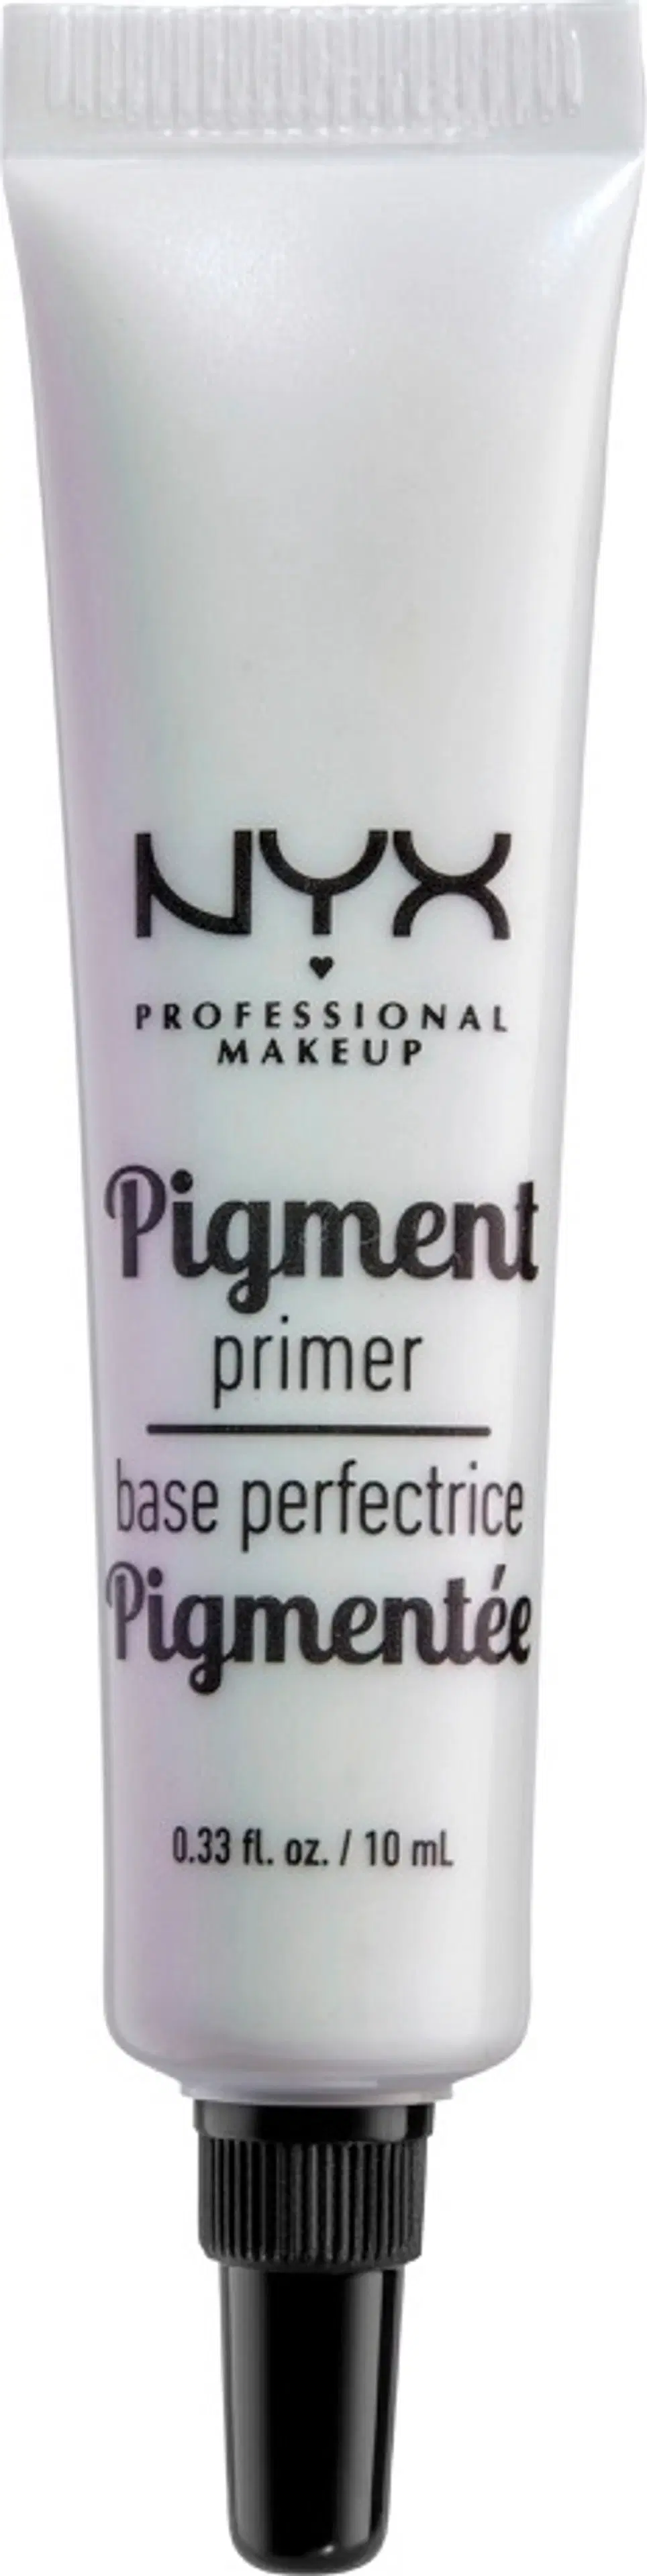 NYX Professional Makeup Pigment Primer pigmentin pojustusvoide 10 ml